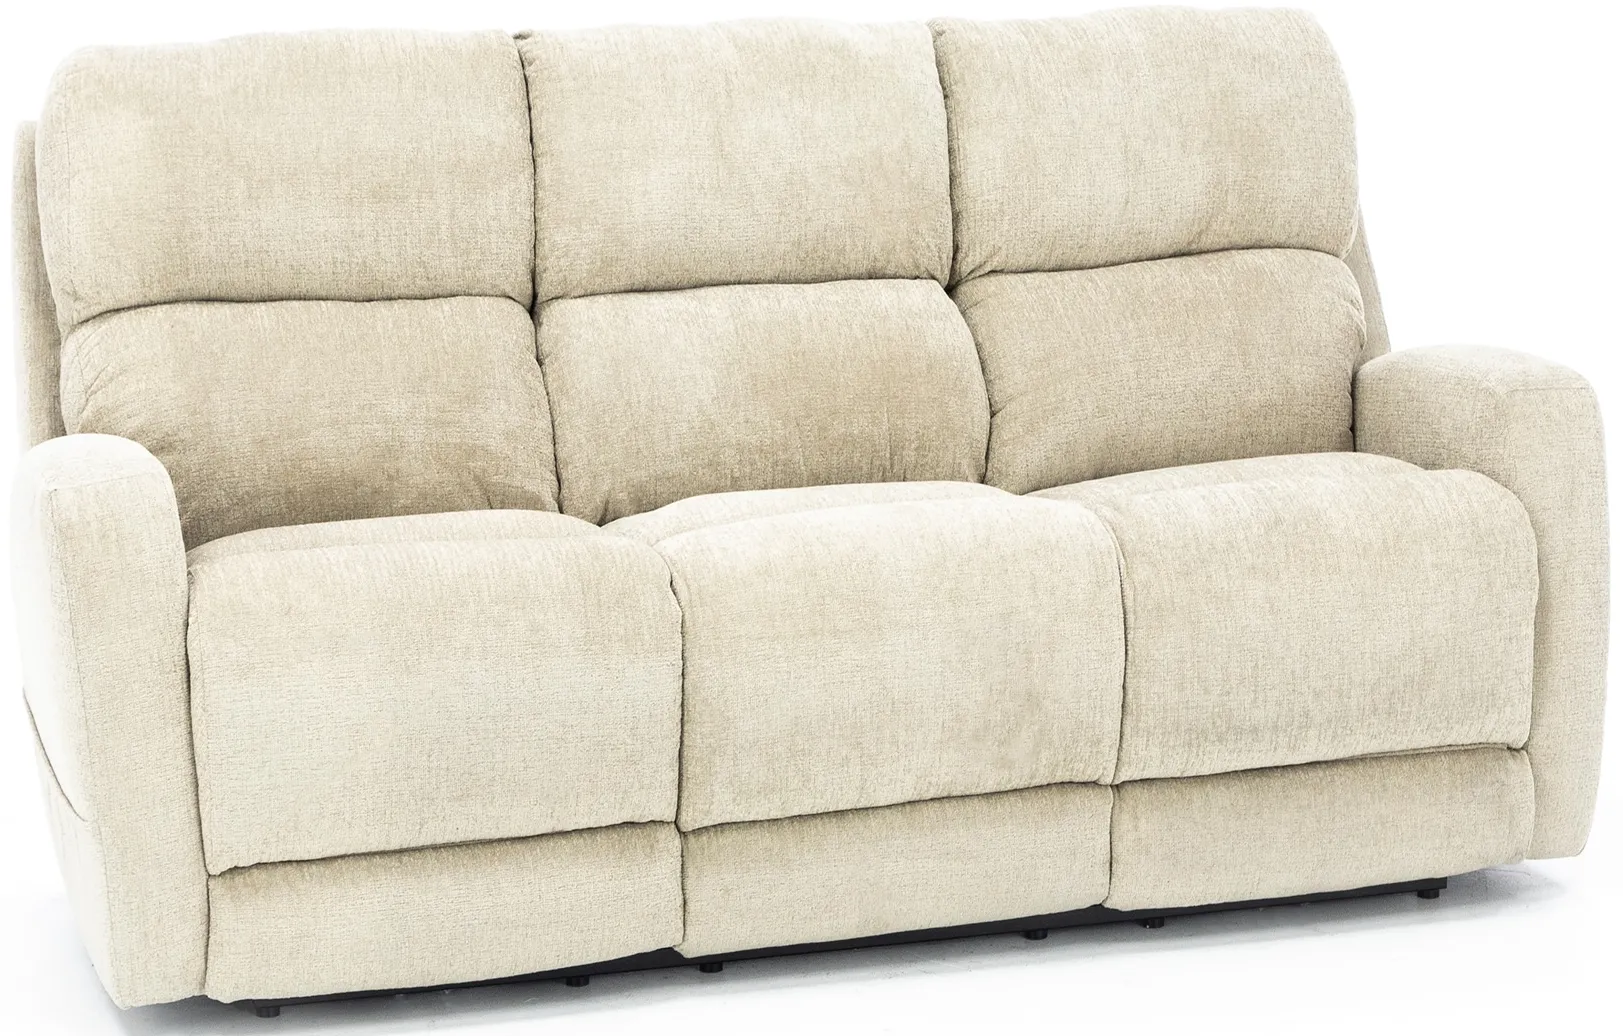 Kenwood Fully Loaded Reclining Sofa in Tan